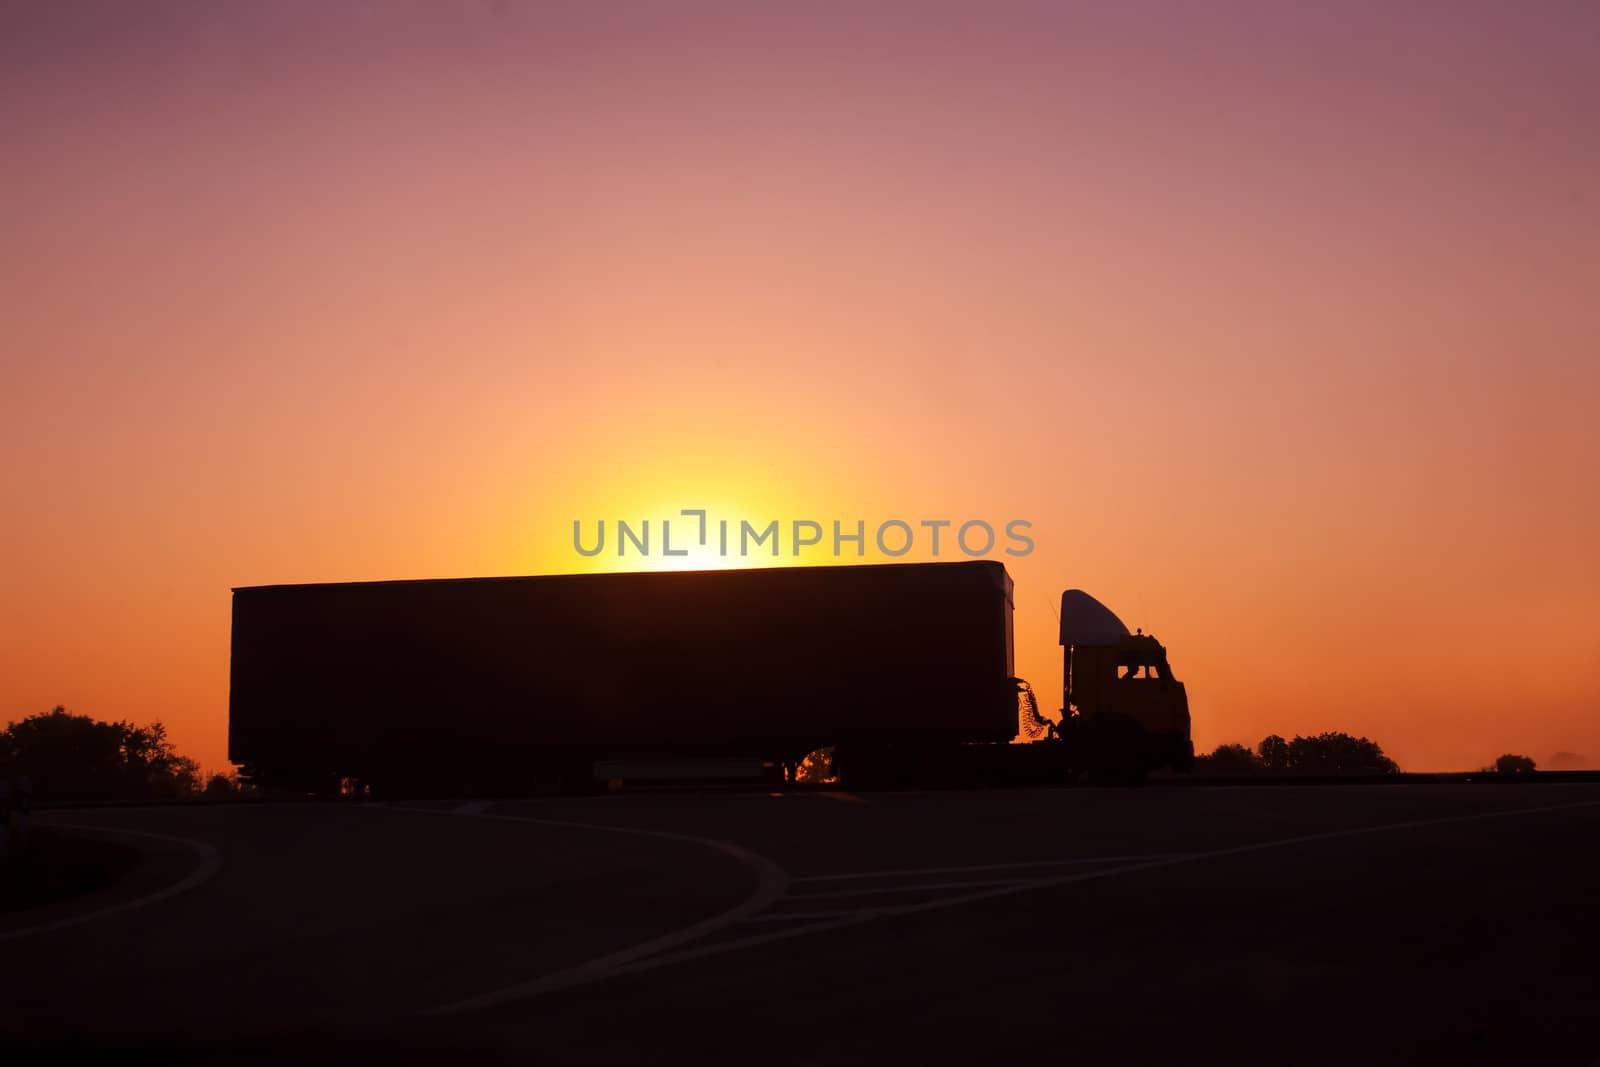 railer goes on  motorway against sunset by yurii_bizgaimer